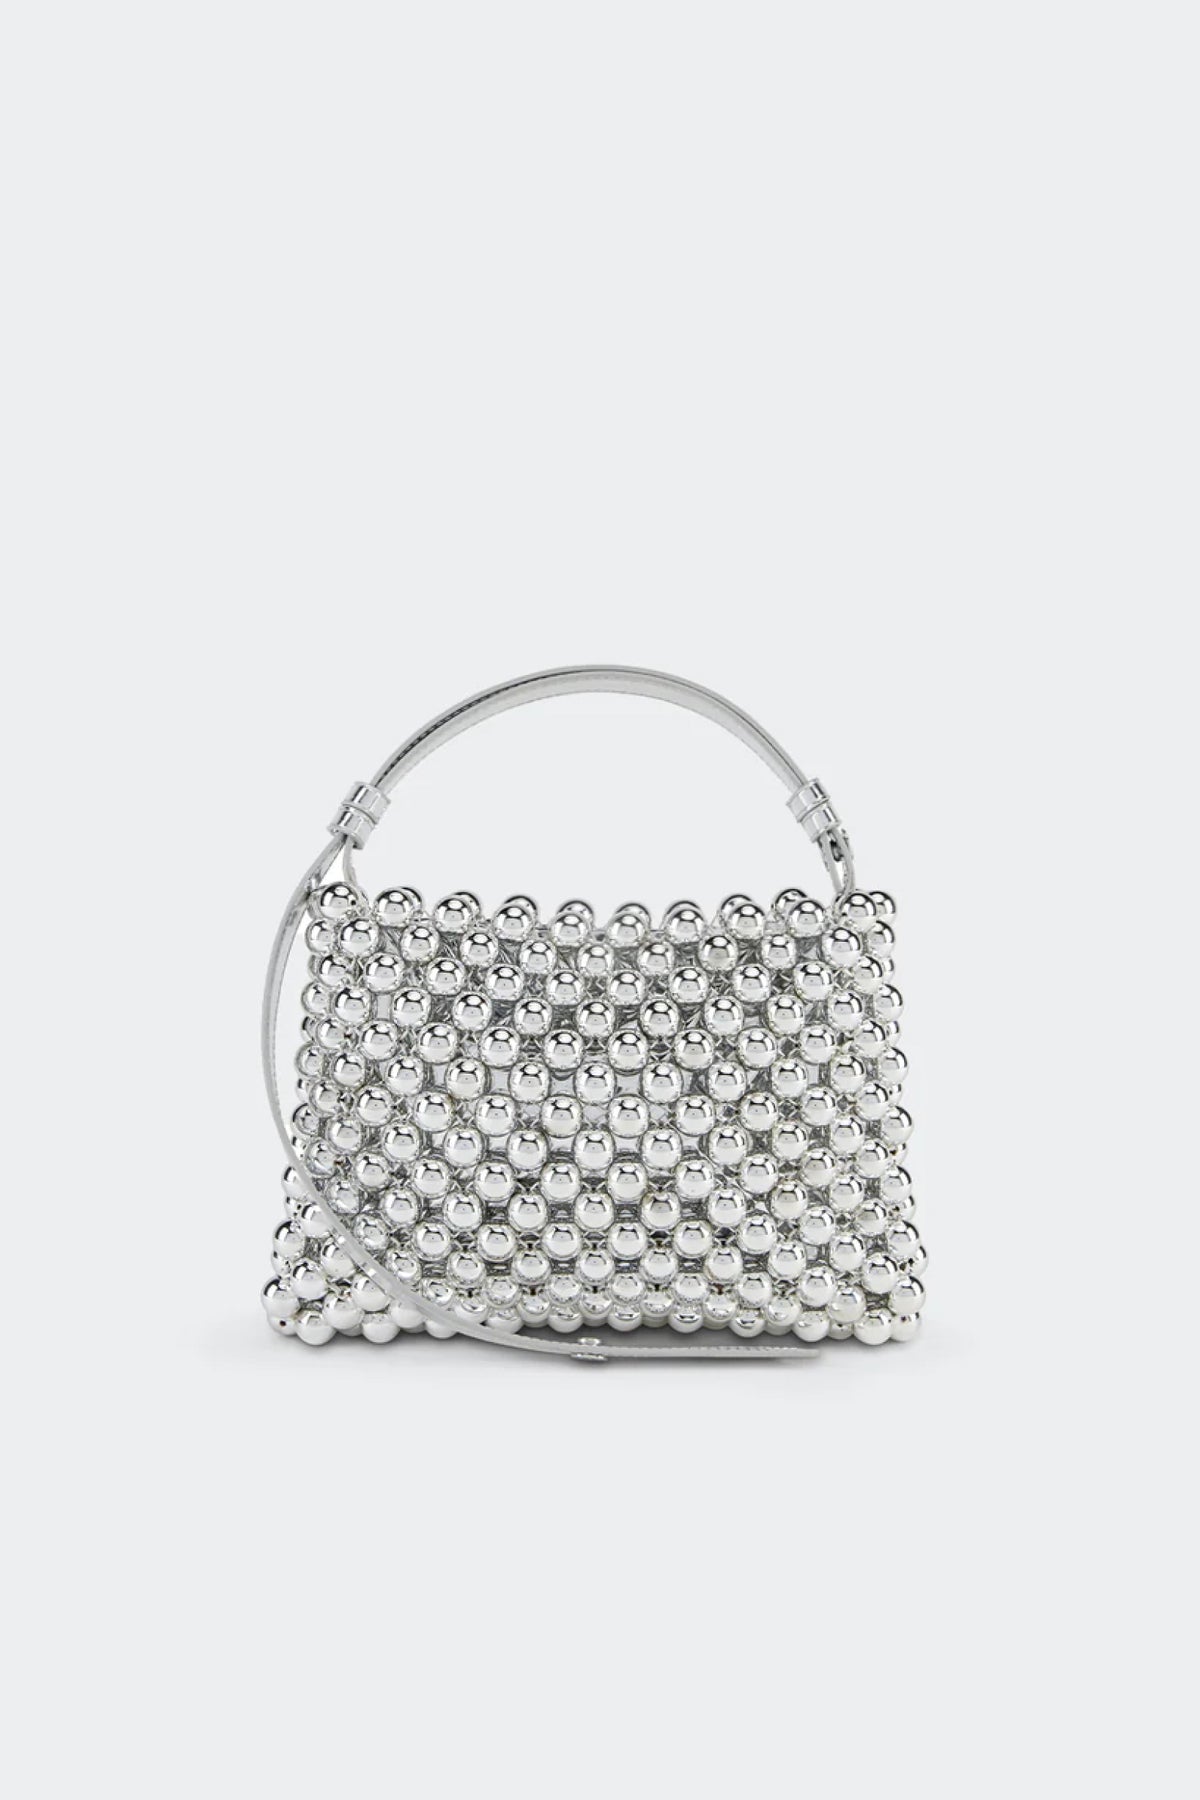 Mini Puffin Bag in Silver